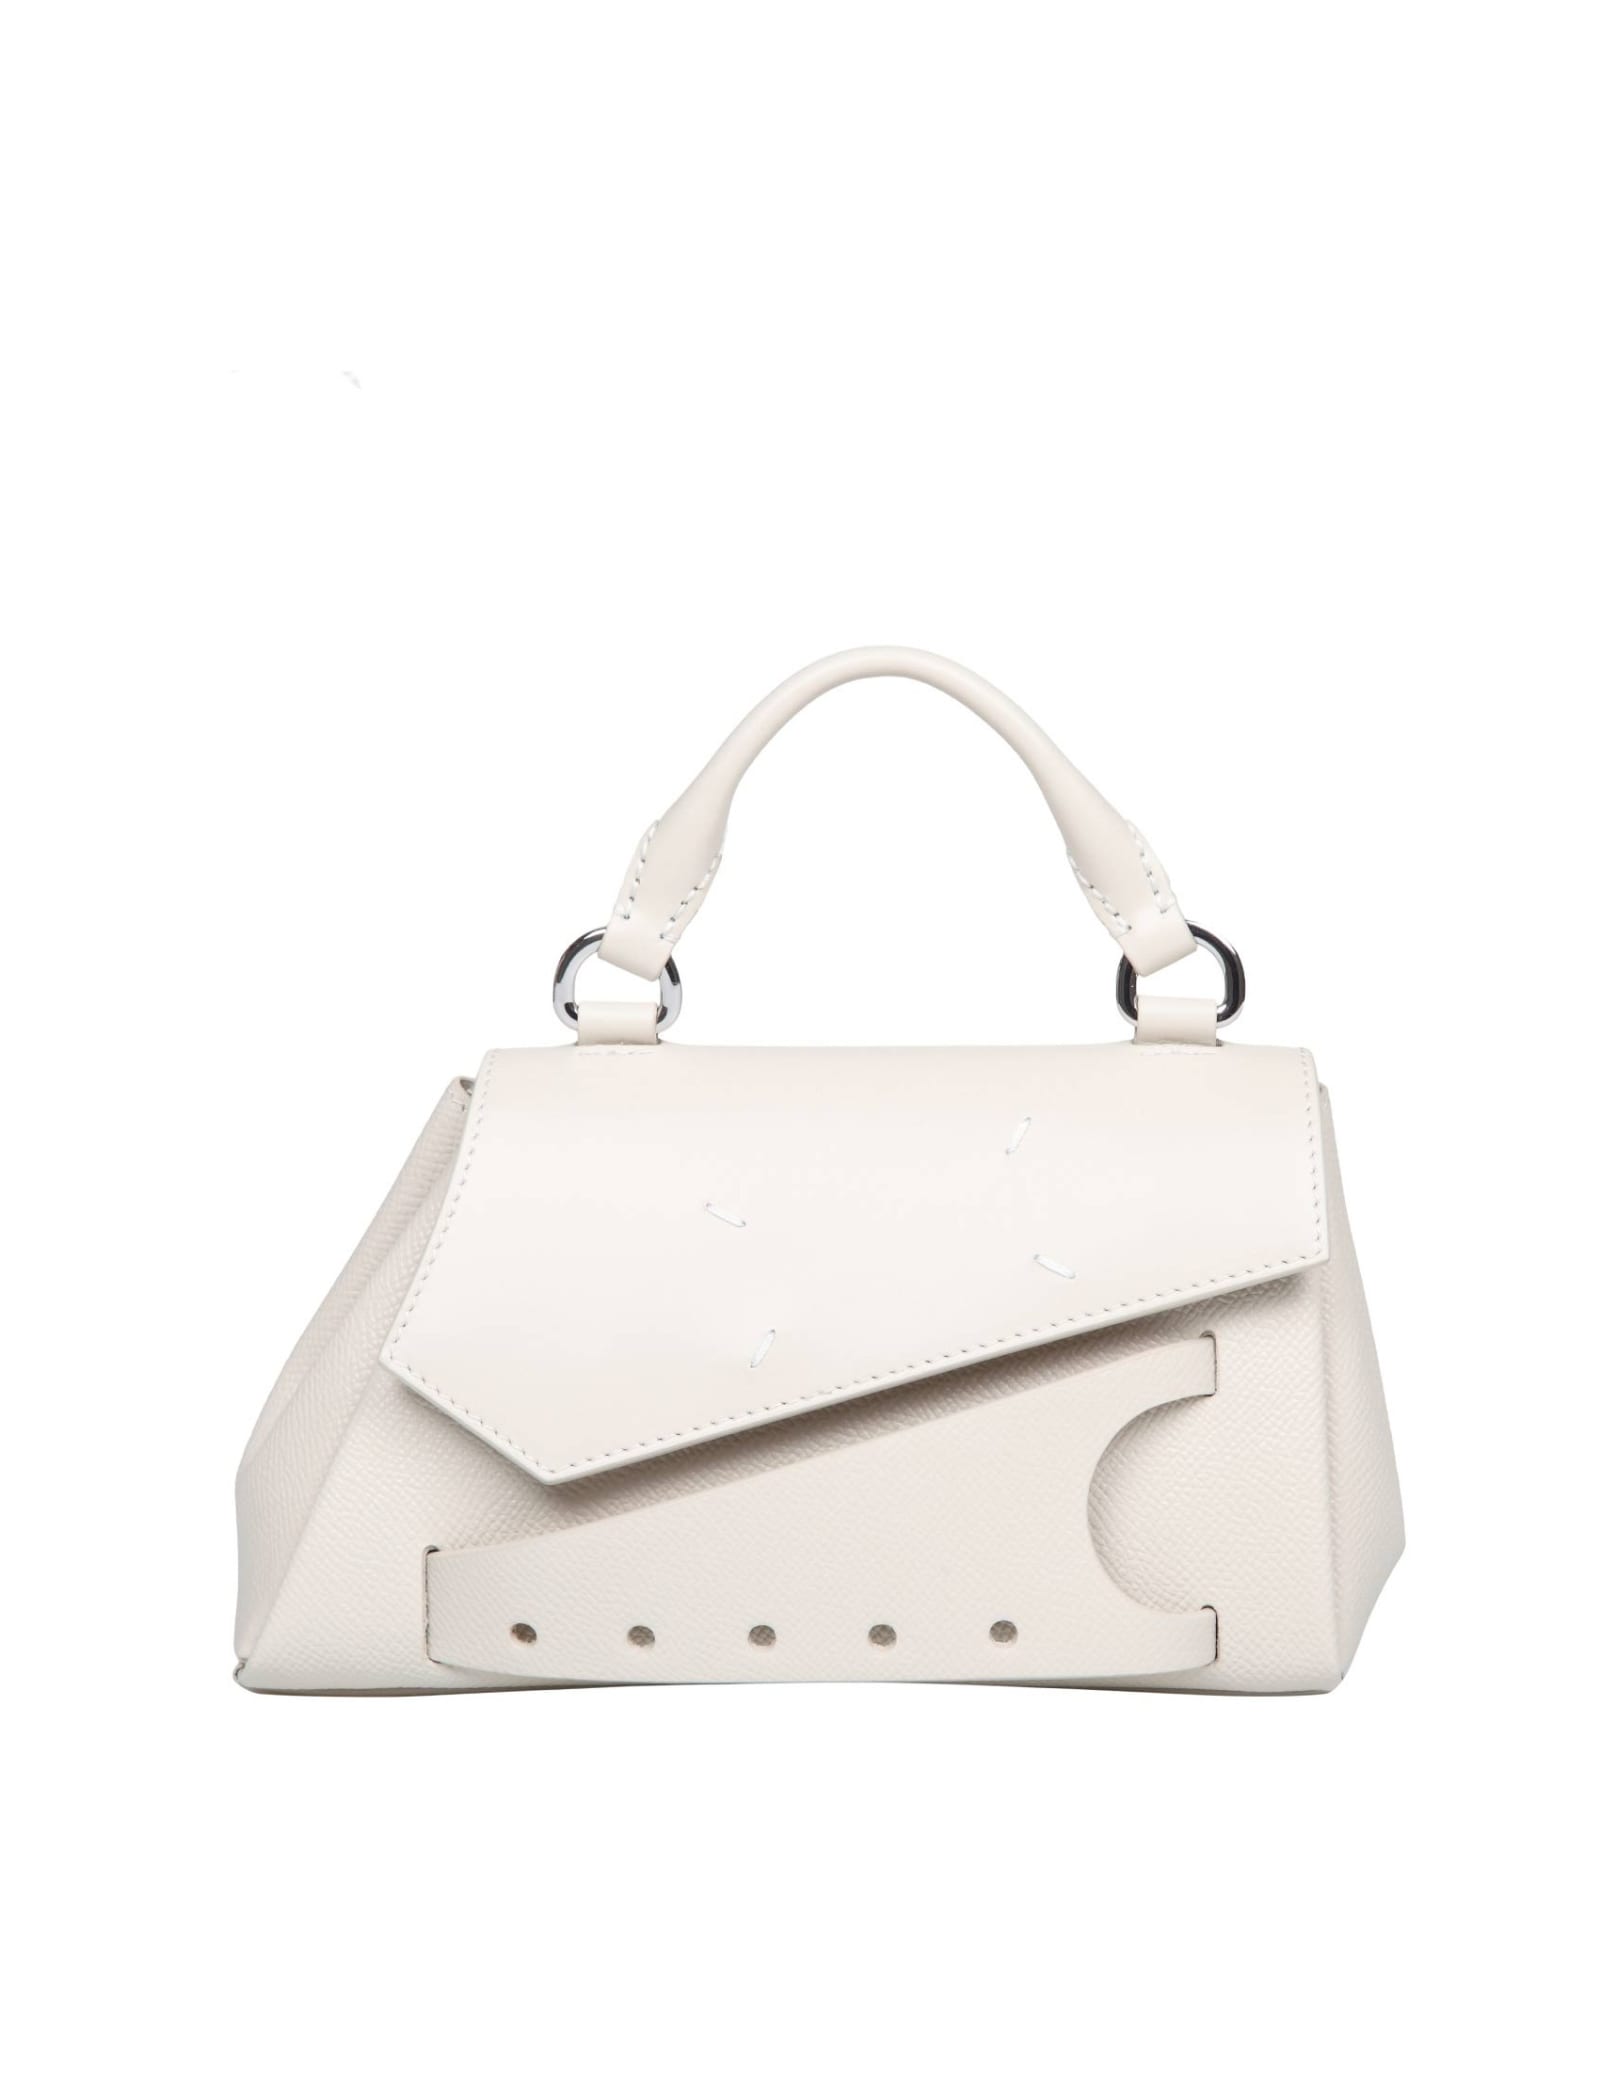 Maison Margiela Asymmetric Handbag In Ivory Color Leather In White